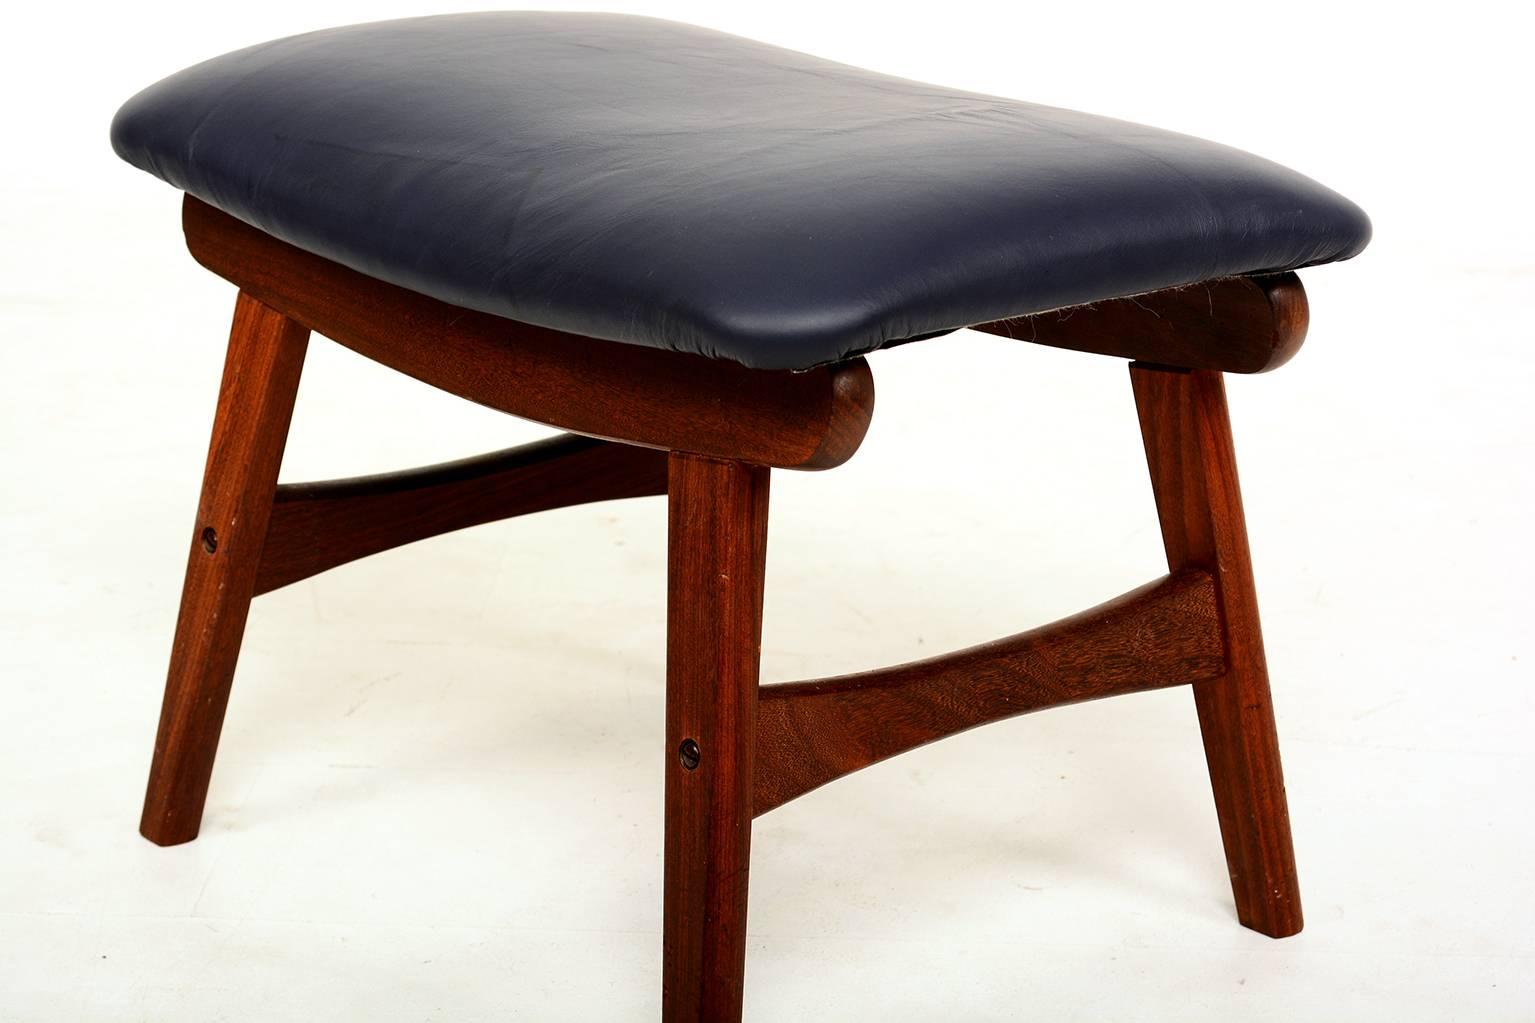 Mid-20th Century Mid Century Danish Modern Teak Stool with leather seat.